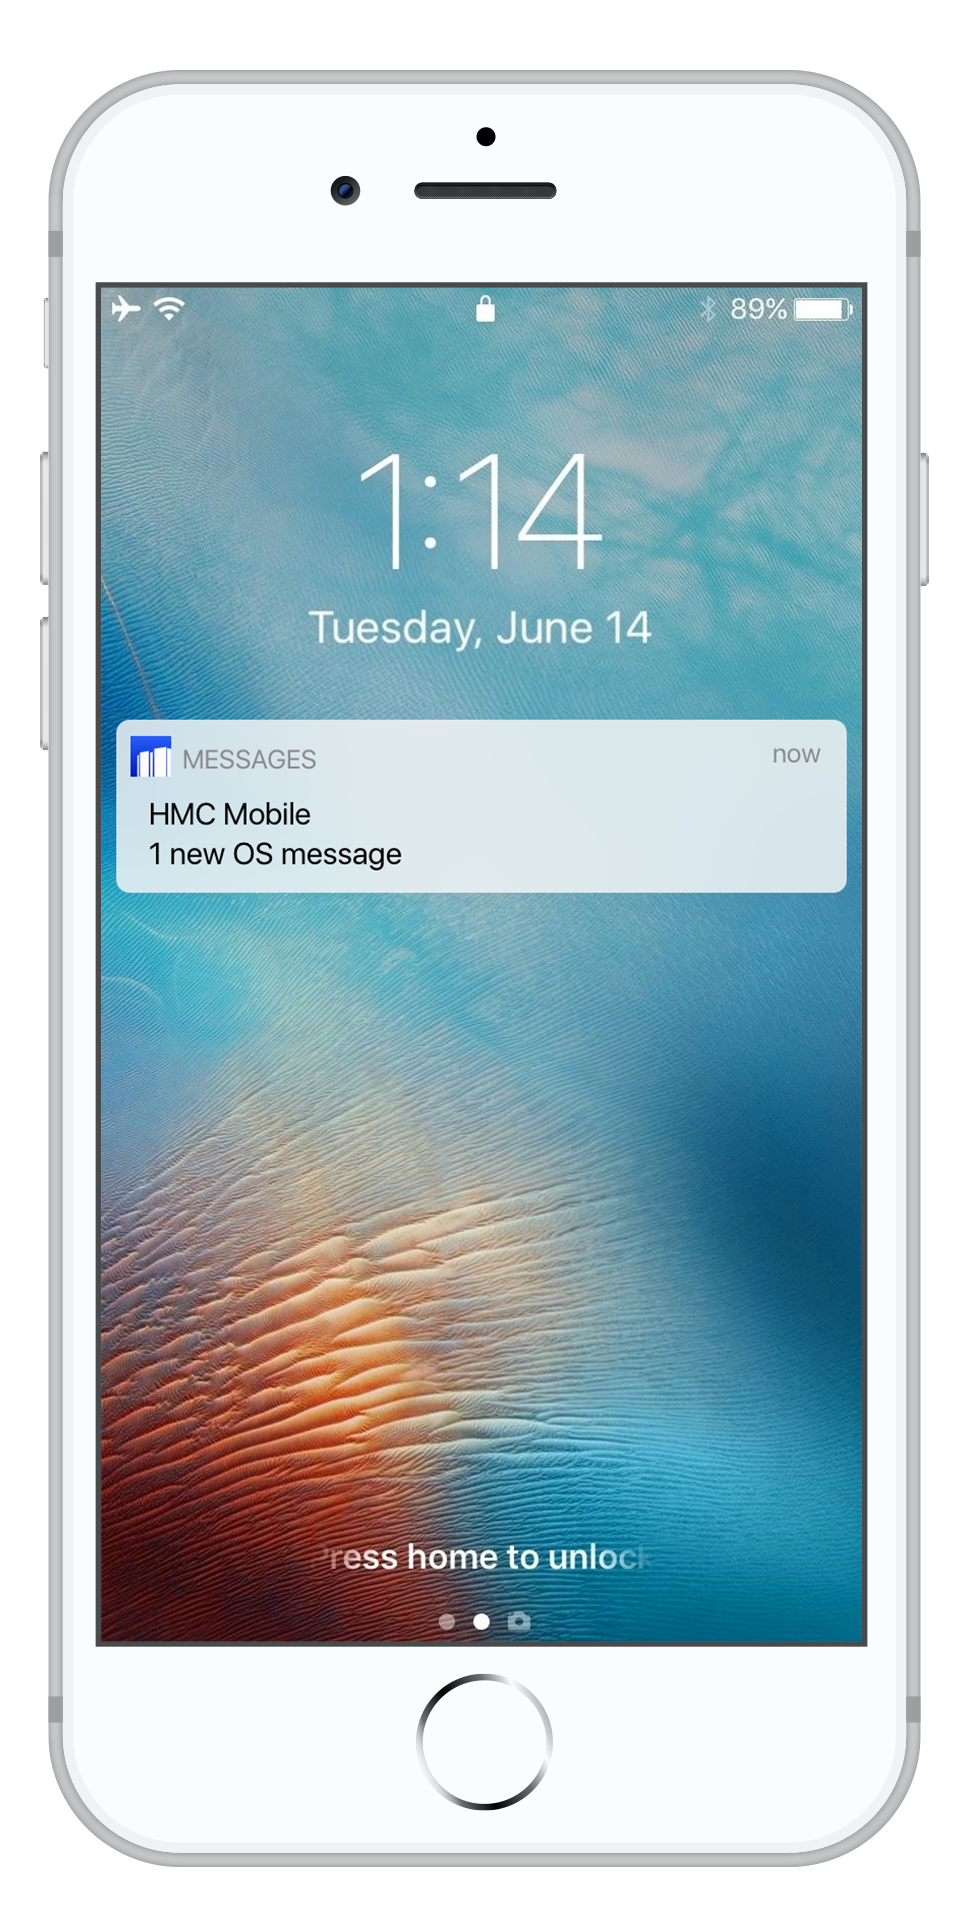 HMC Mobile notifications.